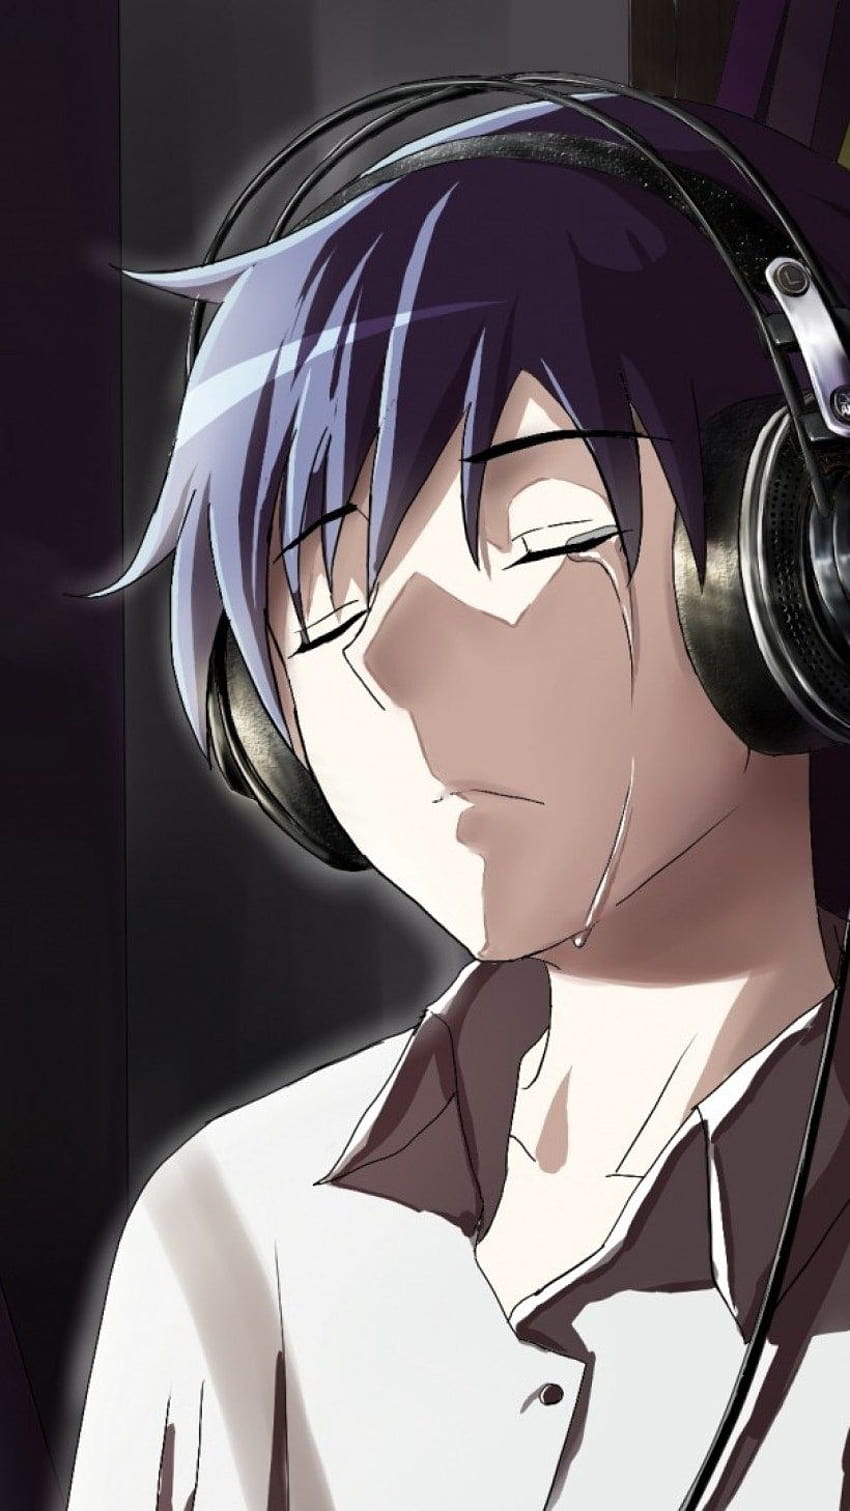 Sedih Anime Boy Menangis, anime boy yang sangat sedih wallpaper ponsel HD